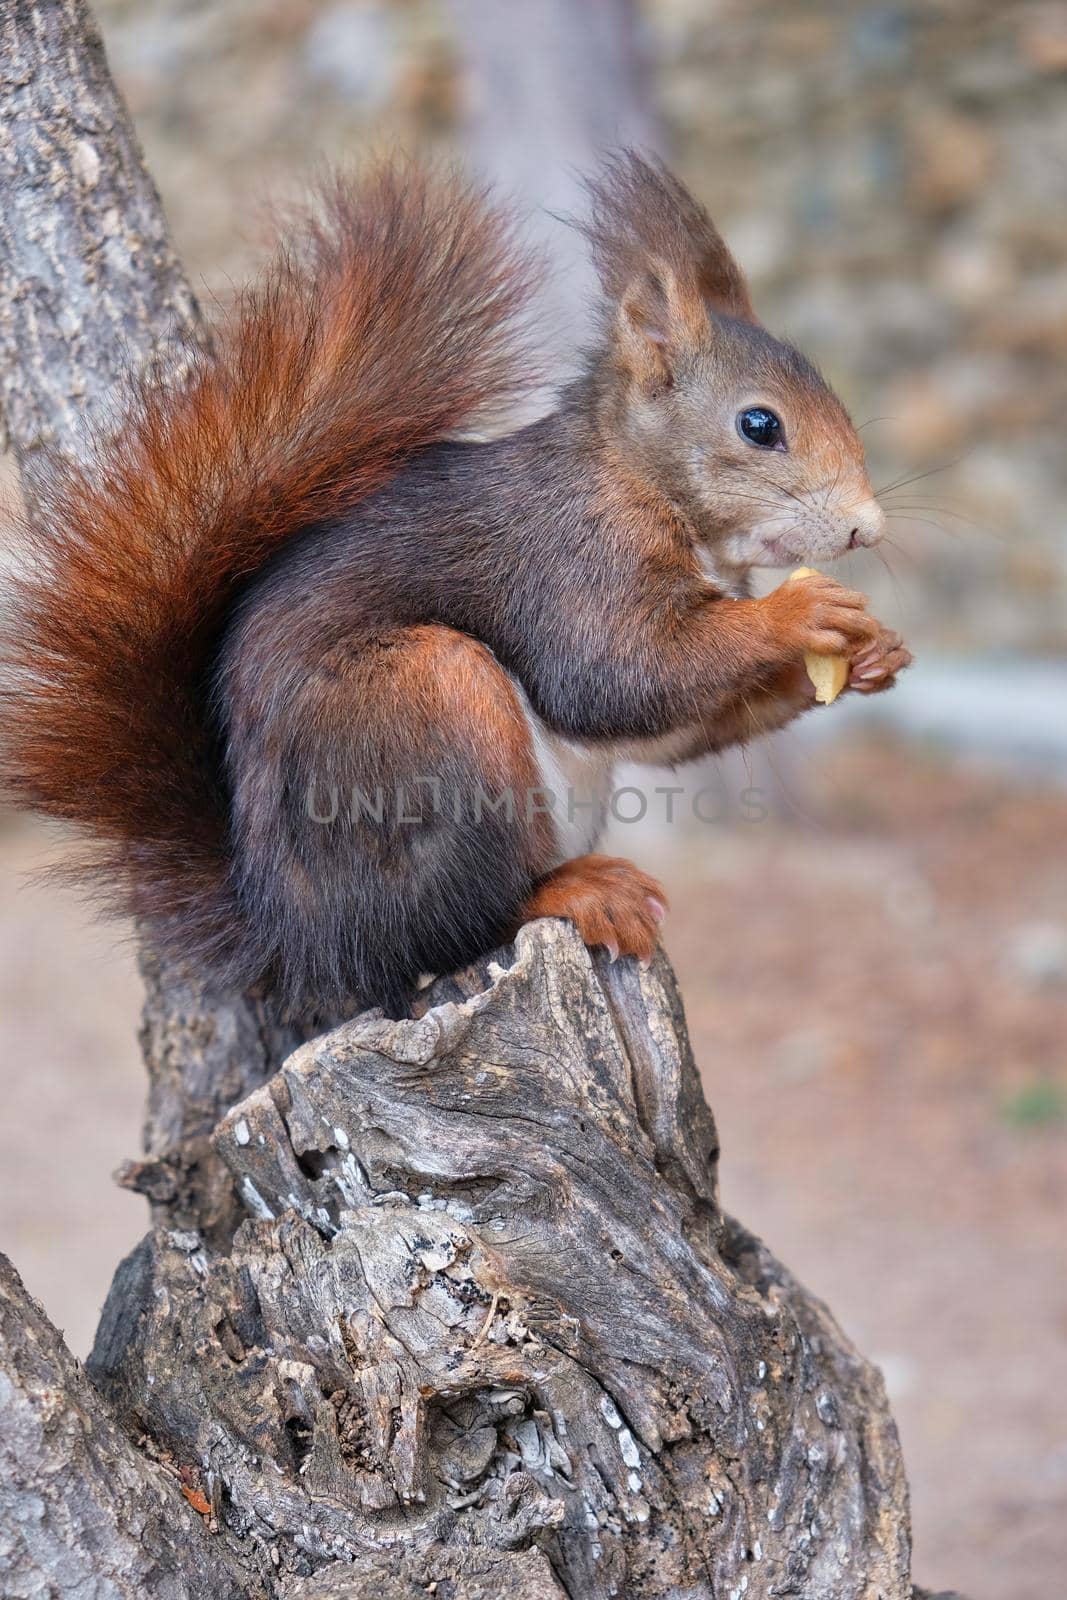 Brown squirrel in an park in Malaga (Spain)